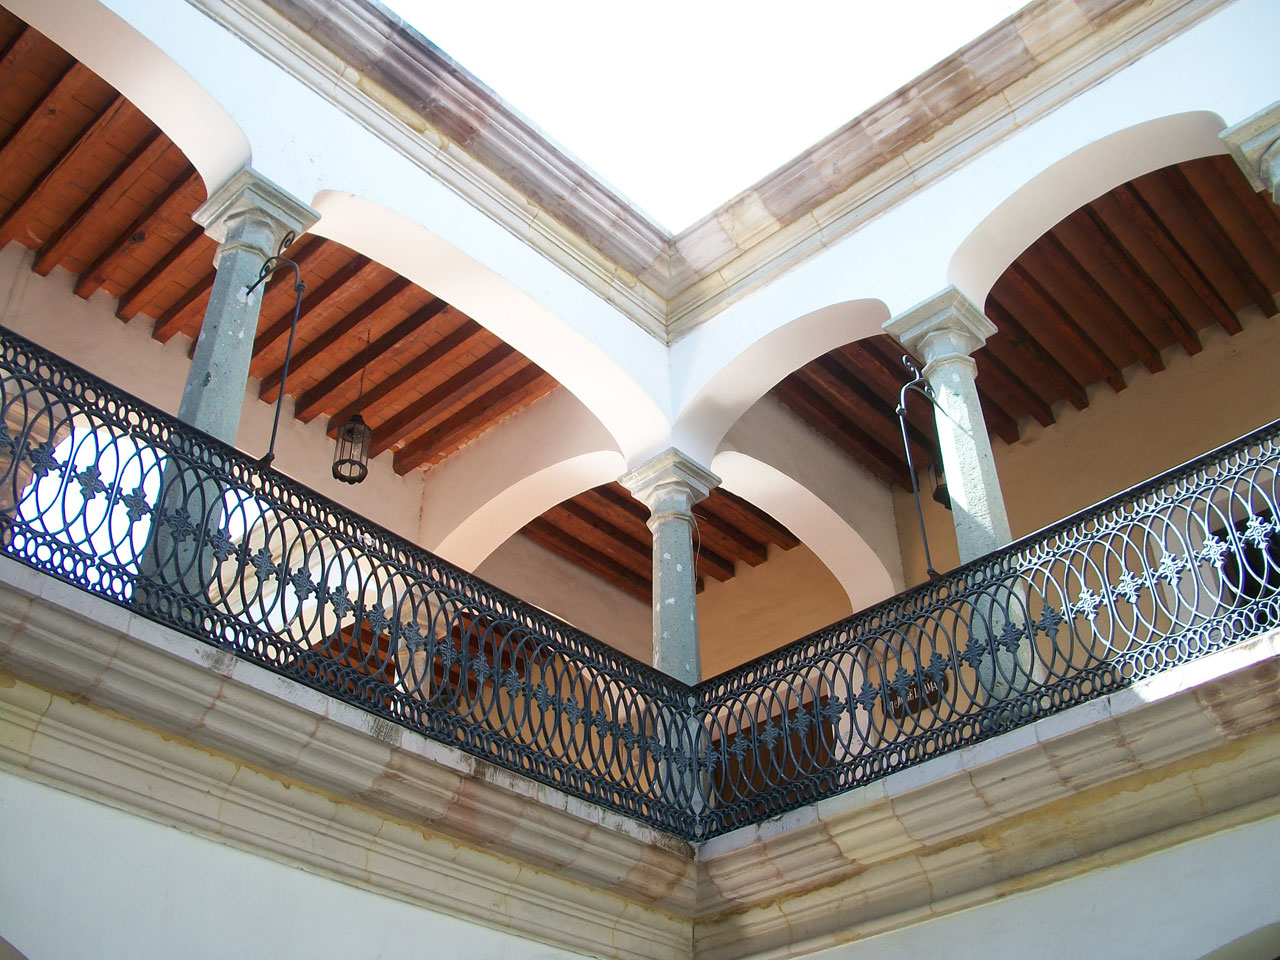 Interior of a colonial building.